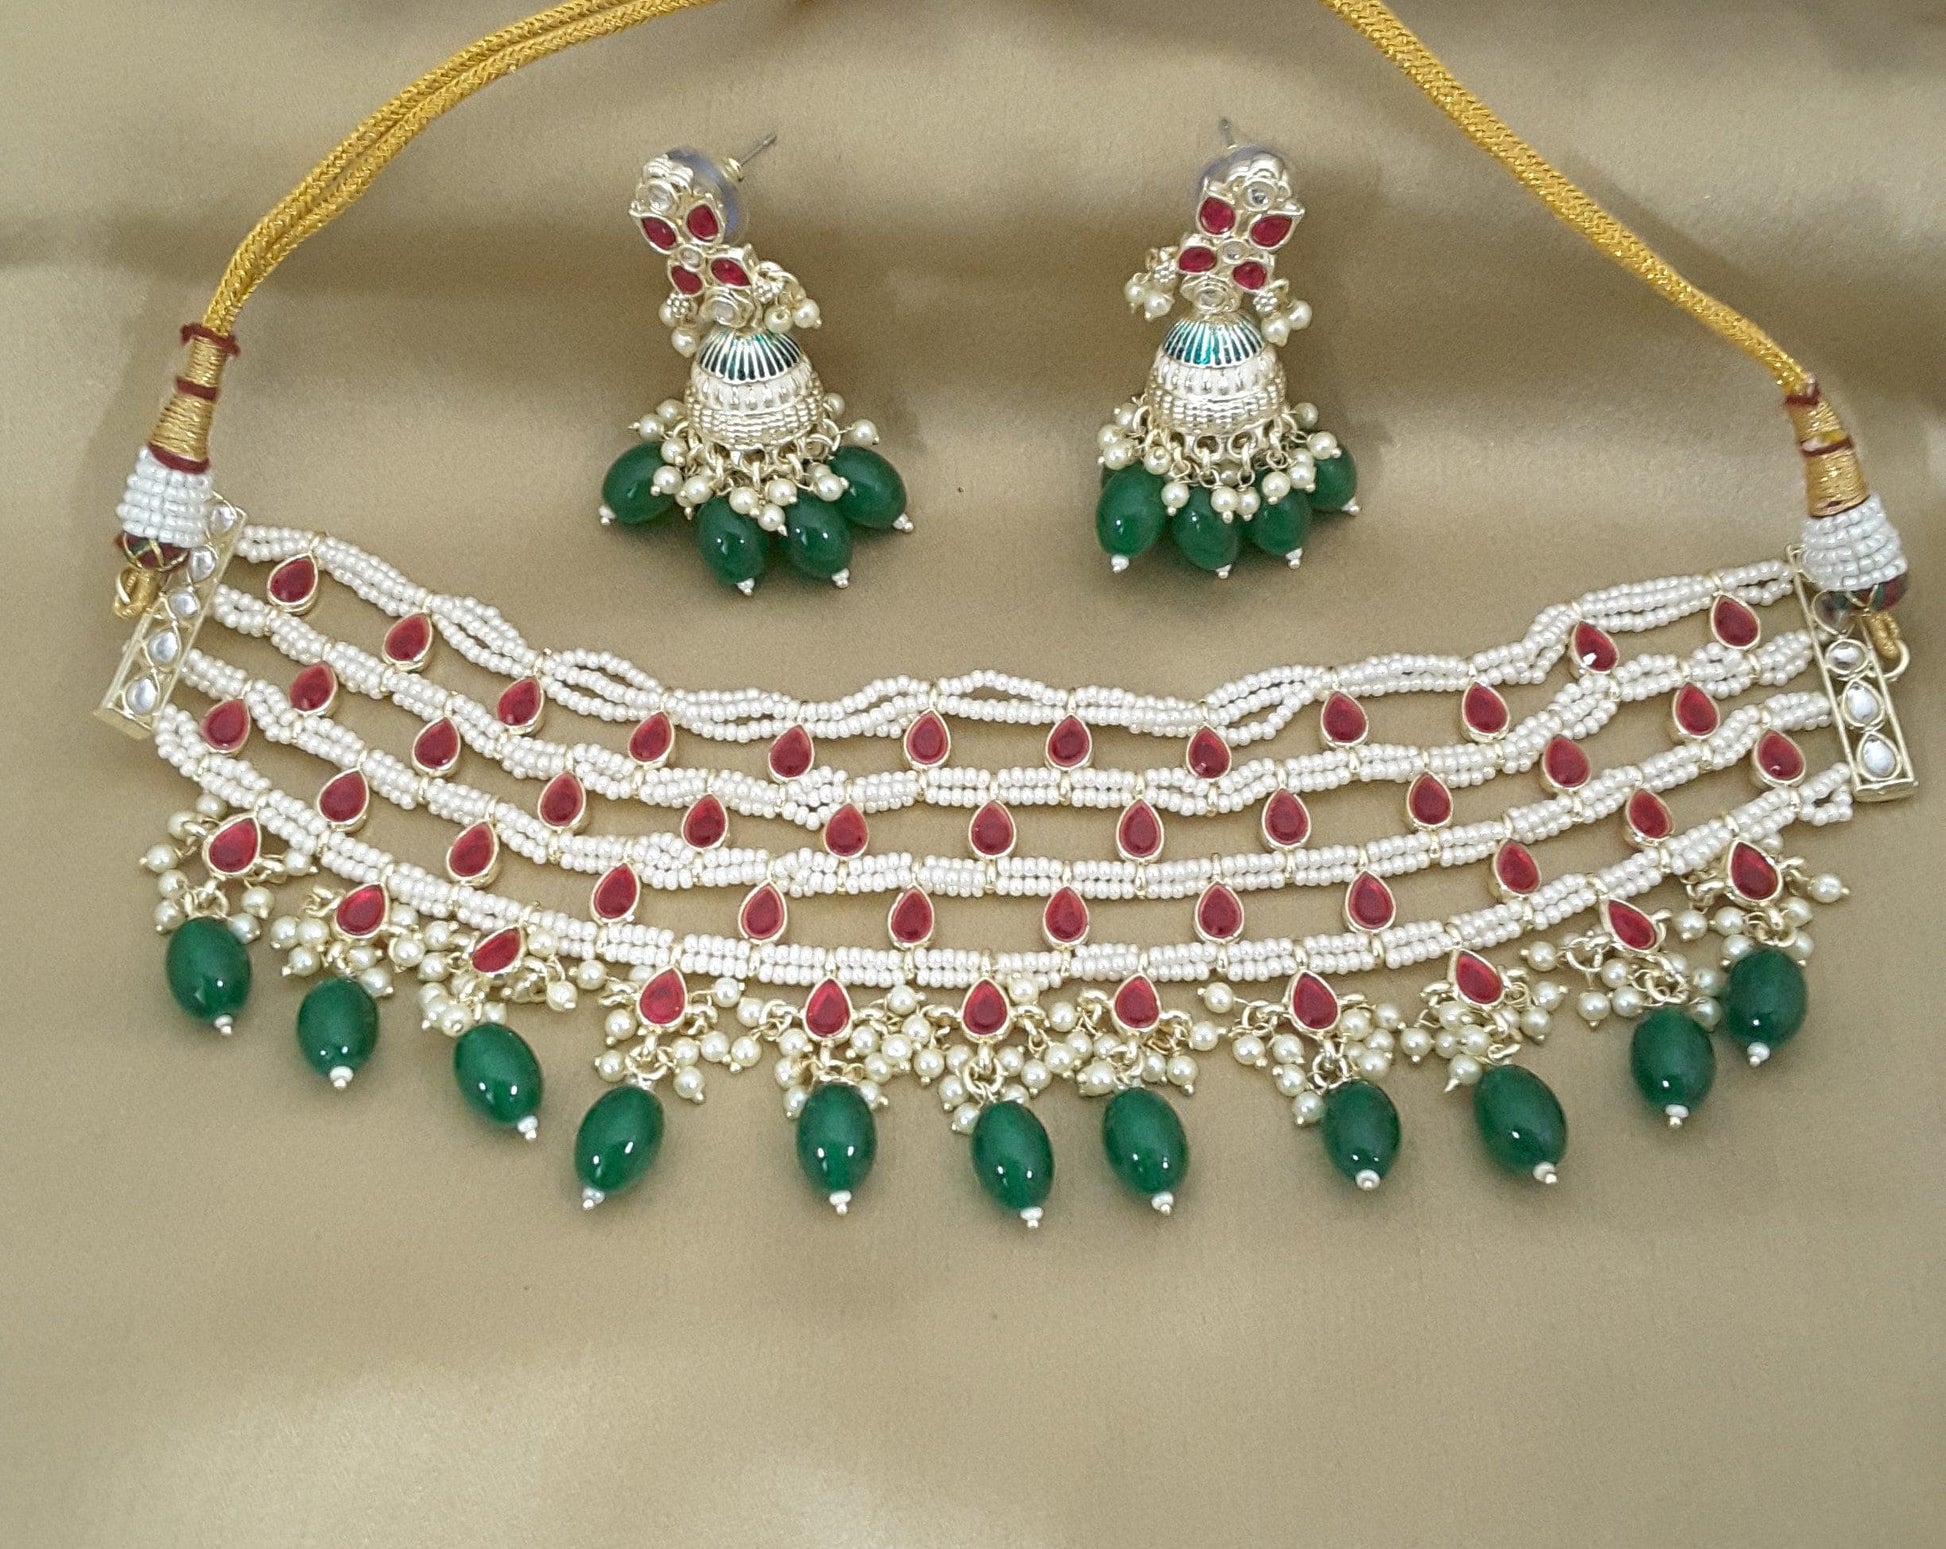 Moonstruck Traditional Indian Meenakari Rani Pink Kundan and Green Beads Choker Necklace Earring Set for Women(Green & Rani Pink) - www.MoonstruckINC.com